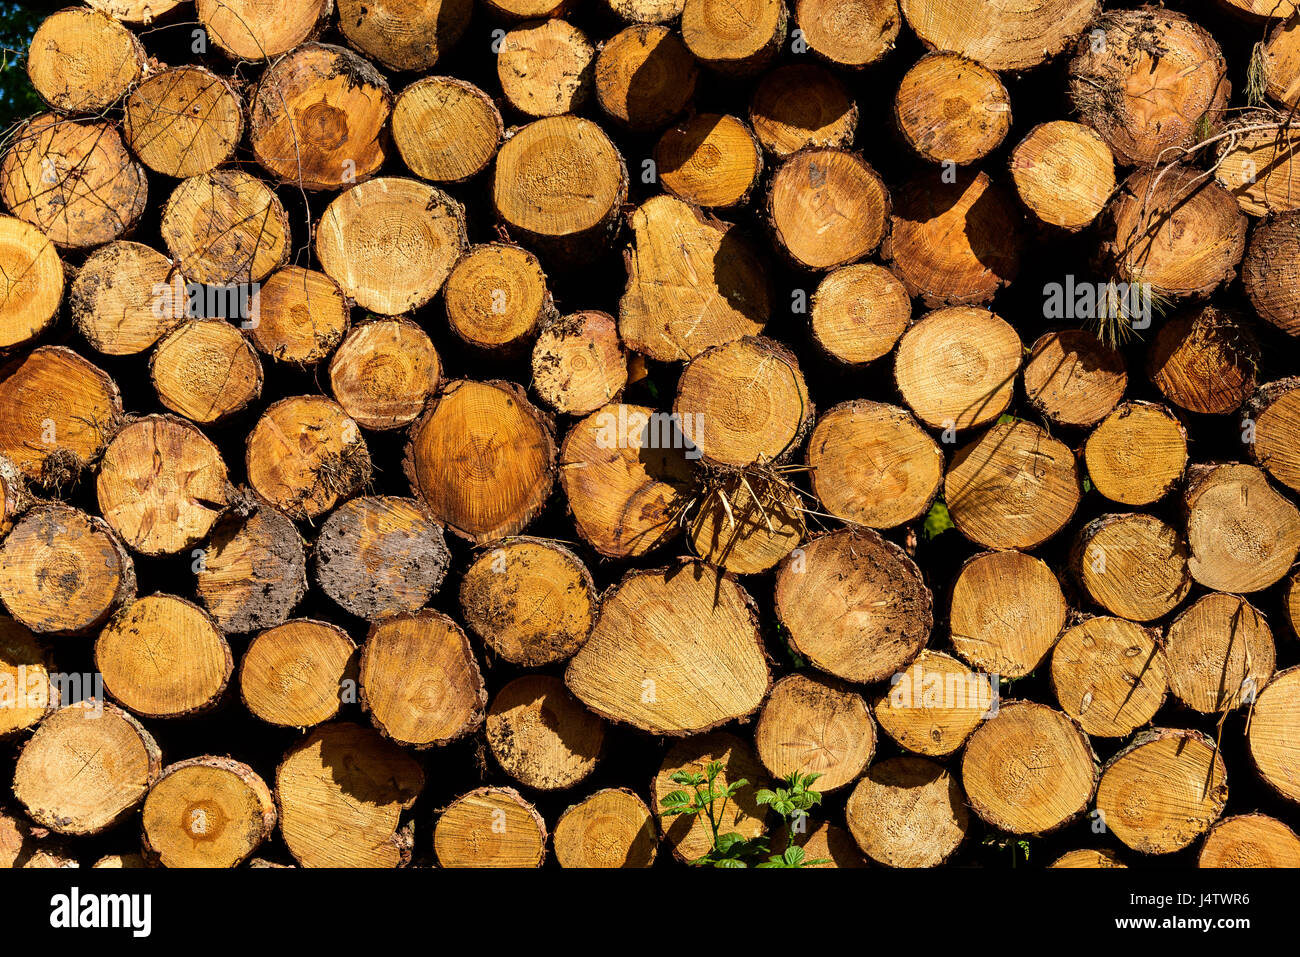 Log pile showing felled pine trees in Peckforton, Cheshire, UK Stock Photo